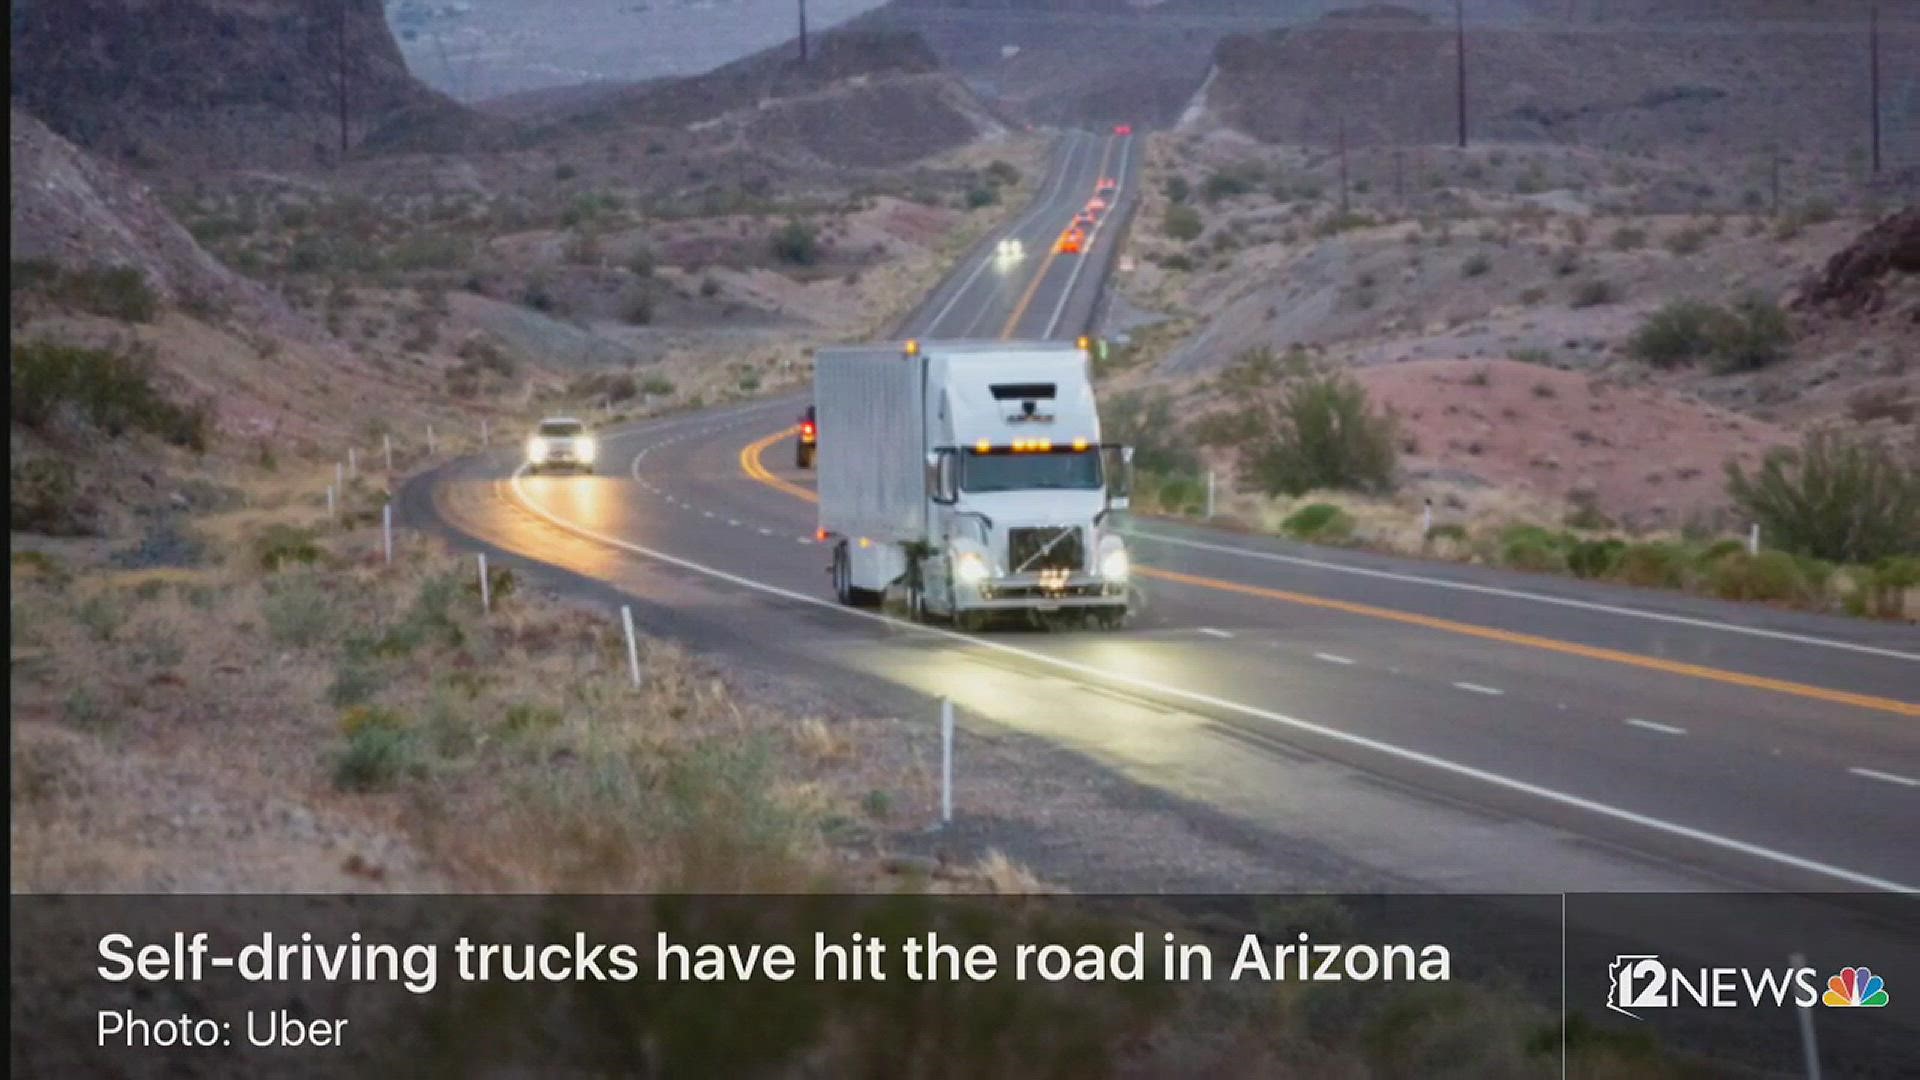 Uber's self-driving trucks are not hauling real loads across Arizona.